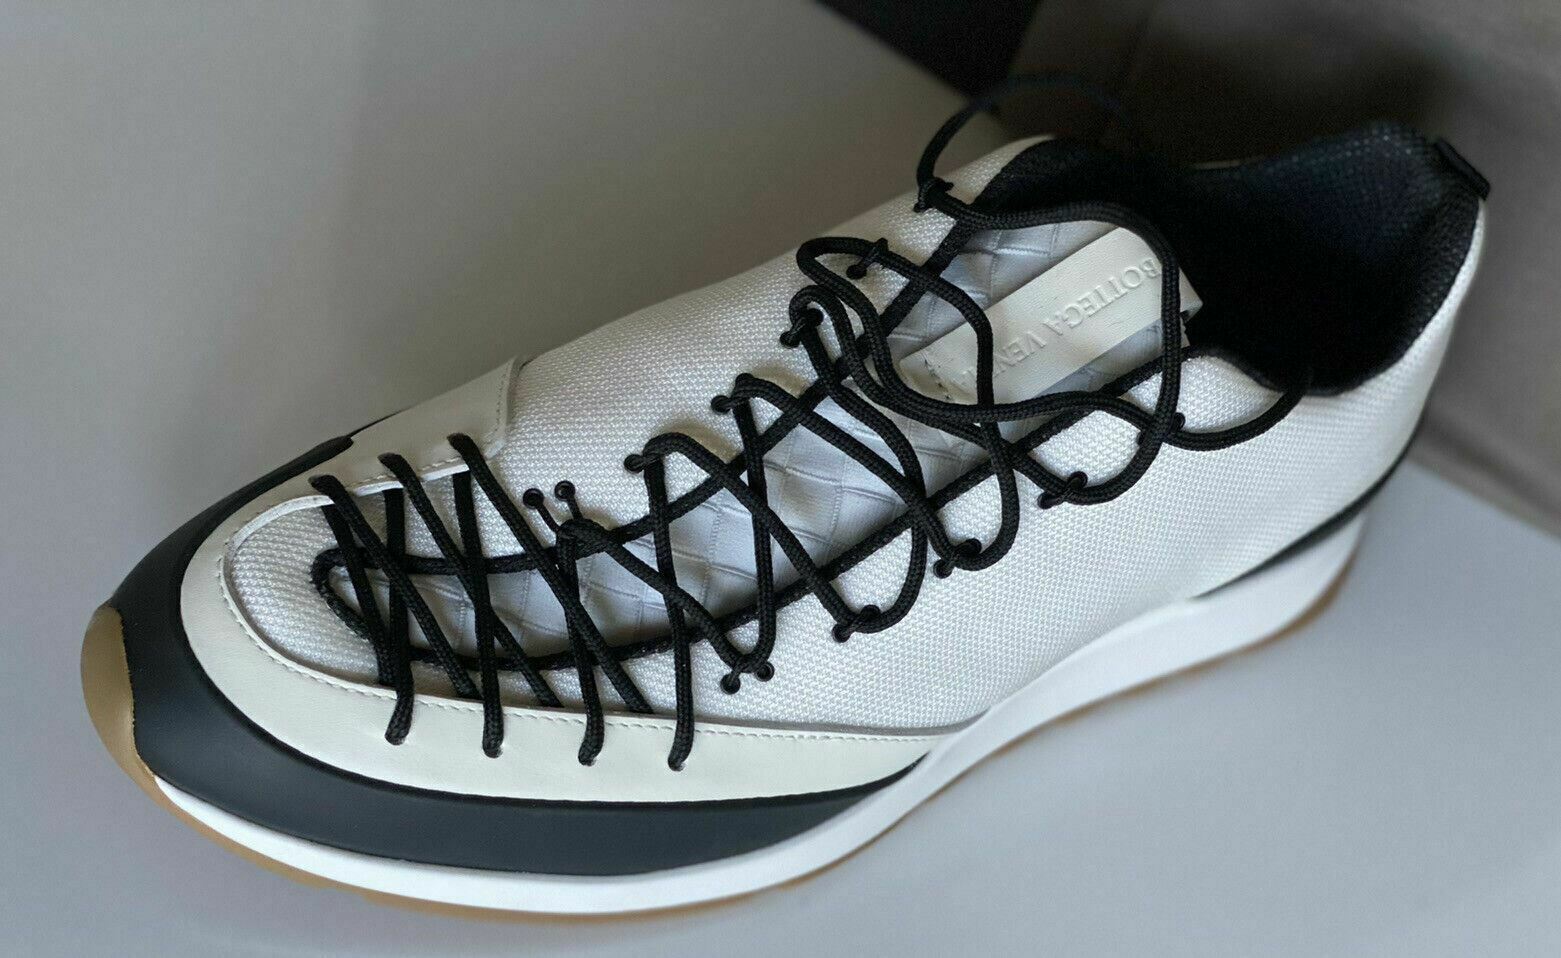 СПИ $790 Мужские белые кроссовки Scar Tex Bottega Veneta 12 США (45 евро) 609891 